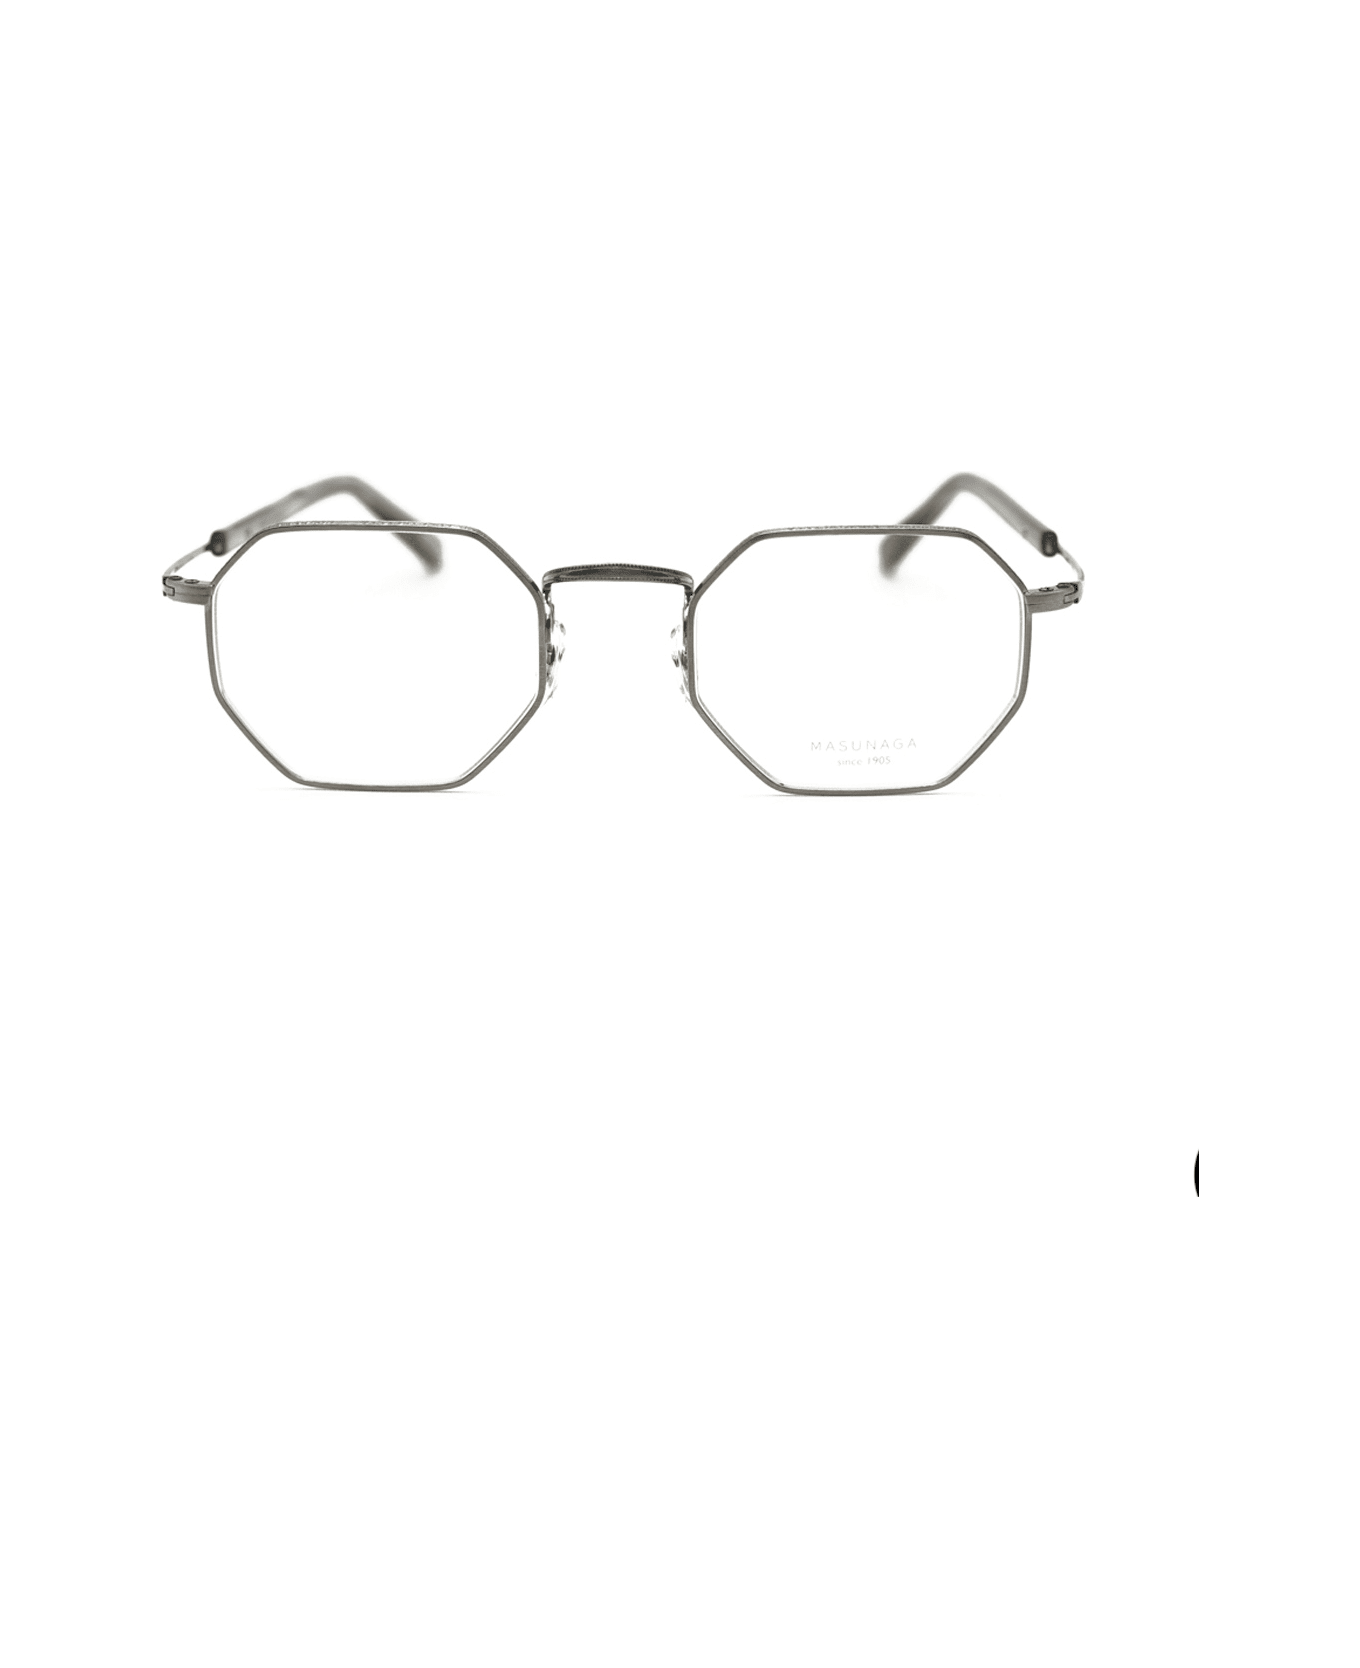 Masunaga 11km4by0a Glasses - Argento